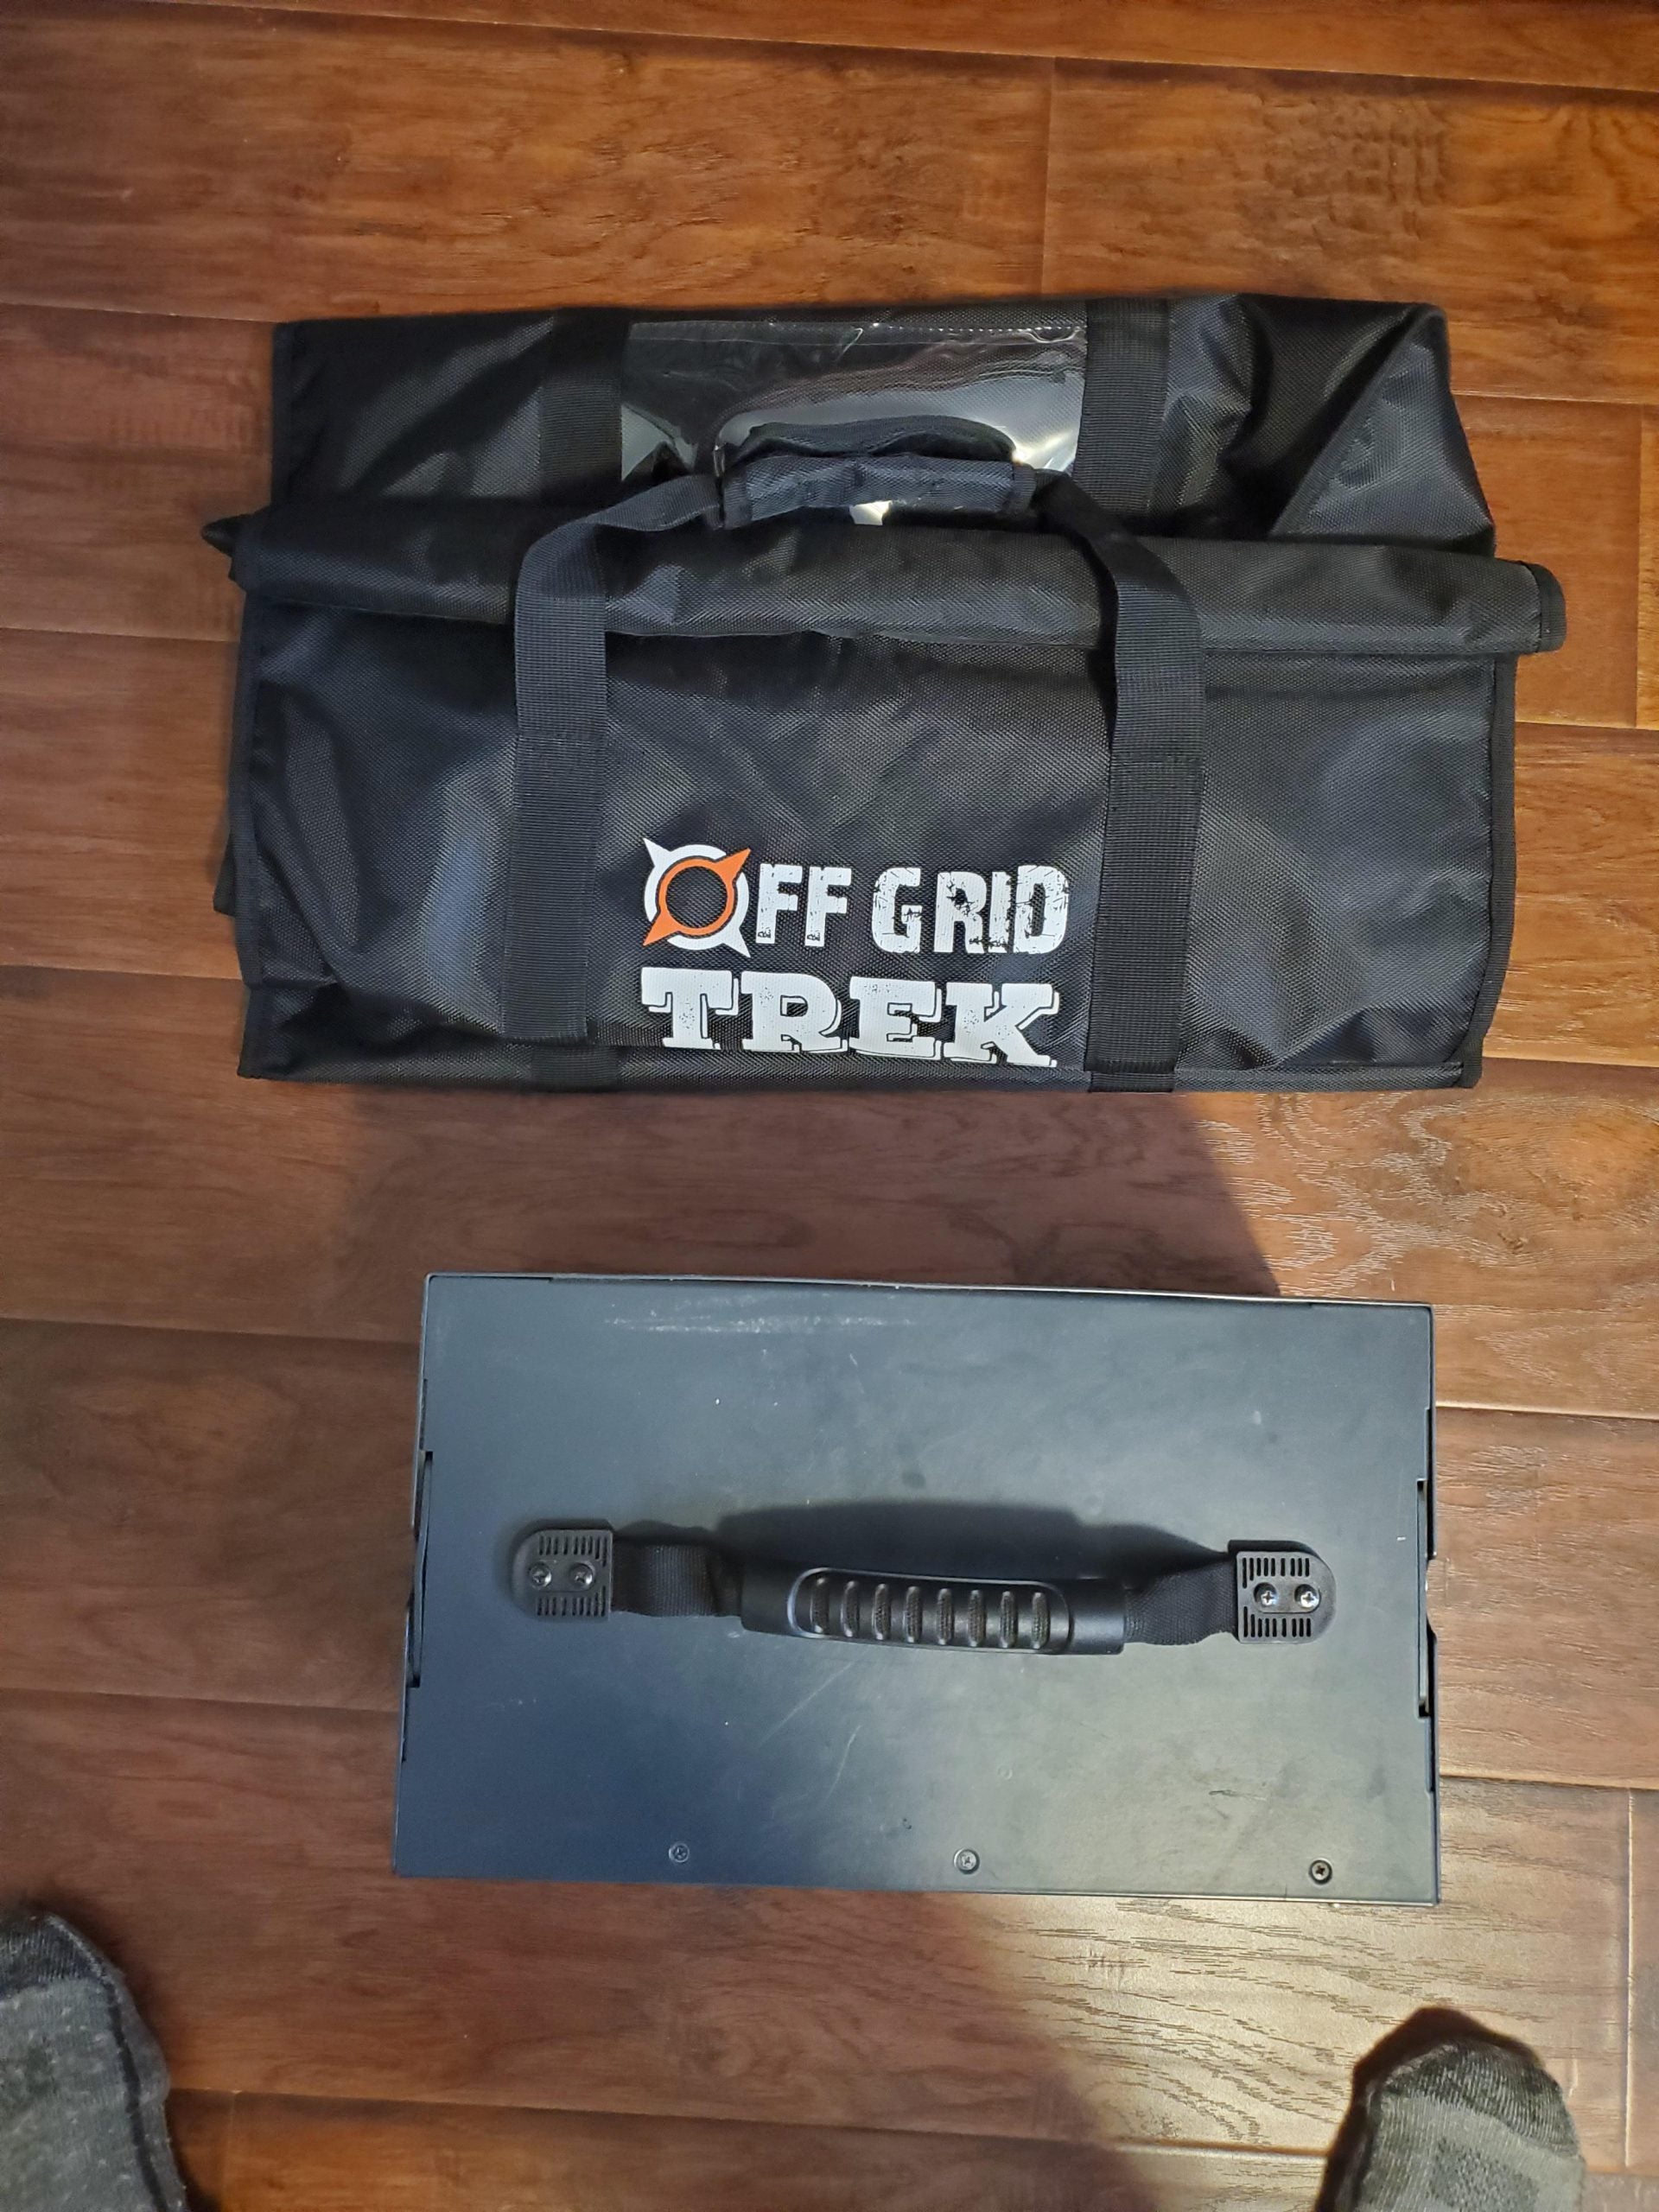 OffGrid® Extract Faraday Bag (Patent Pending) - Faraday Bag